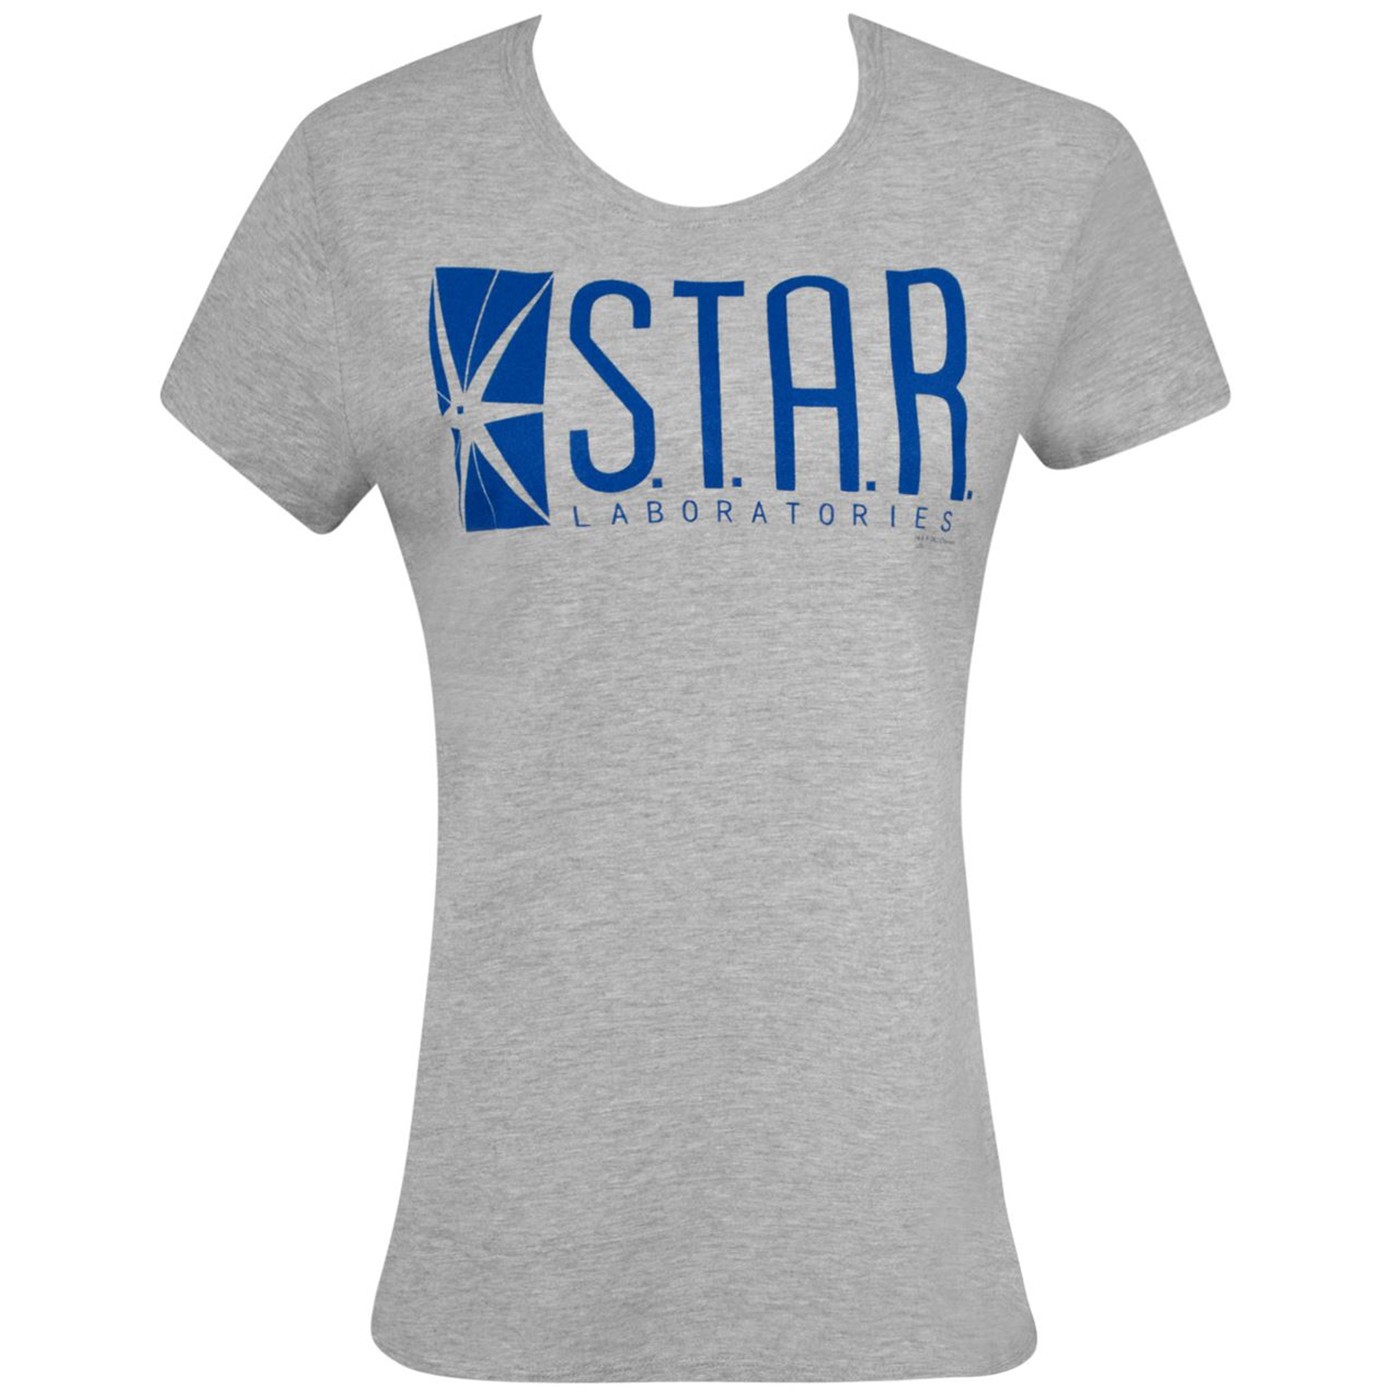 Star Laboratories Grey Women's T-Shirt